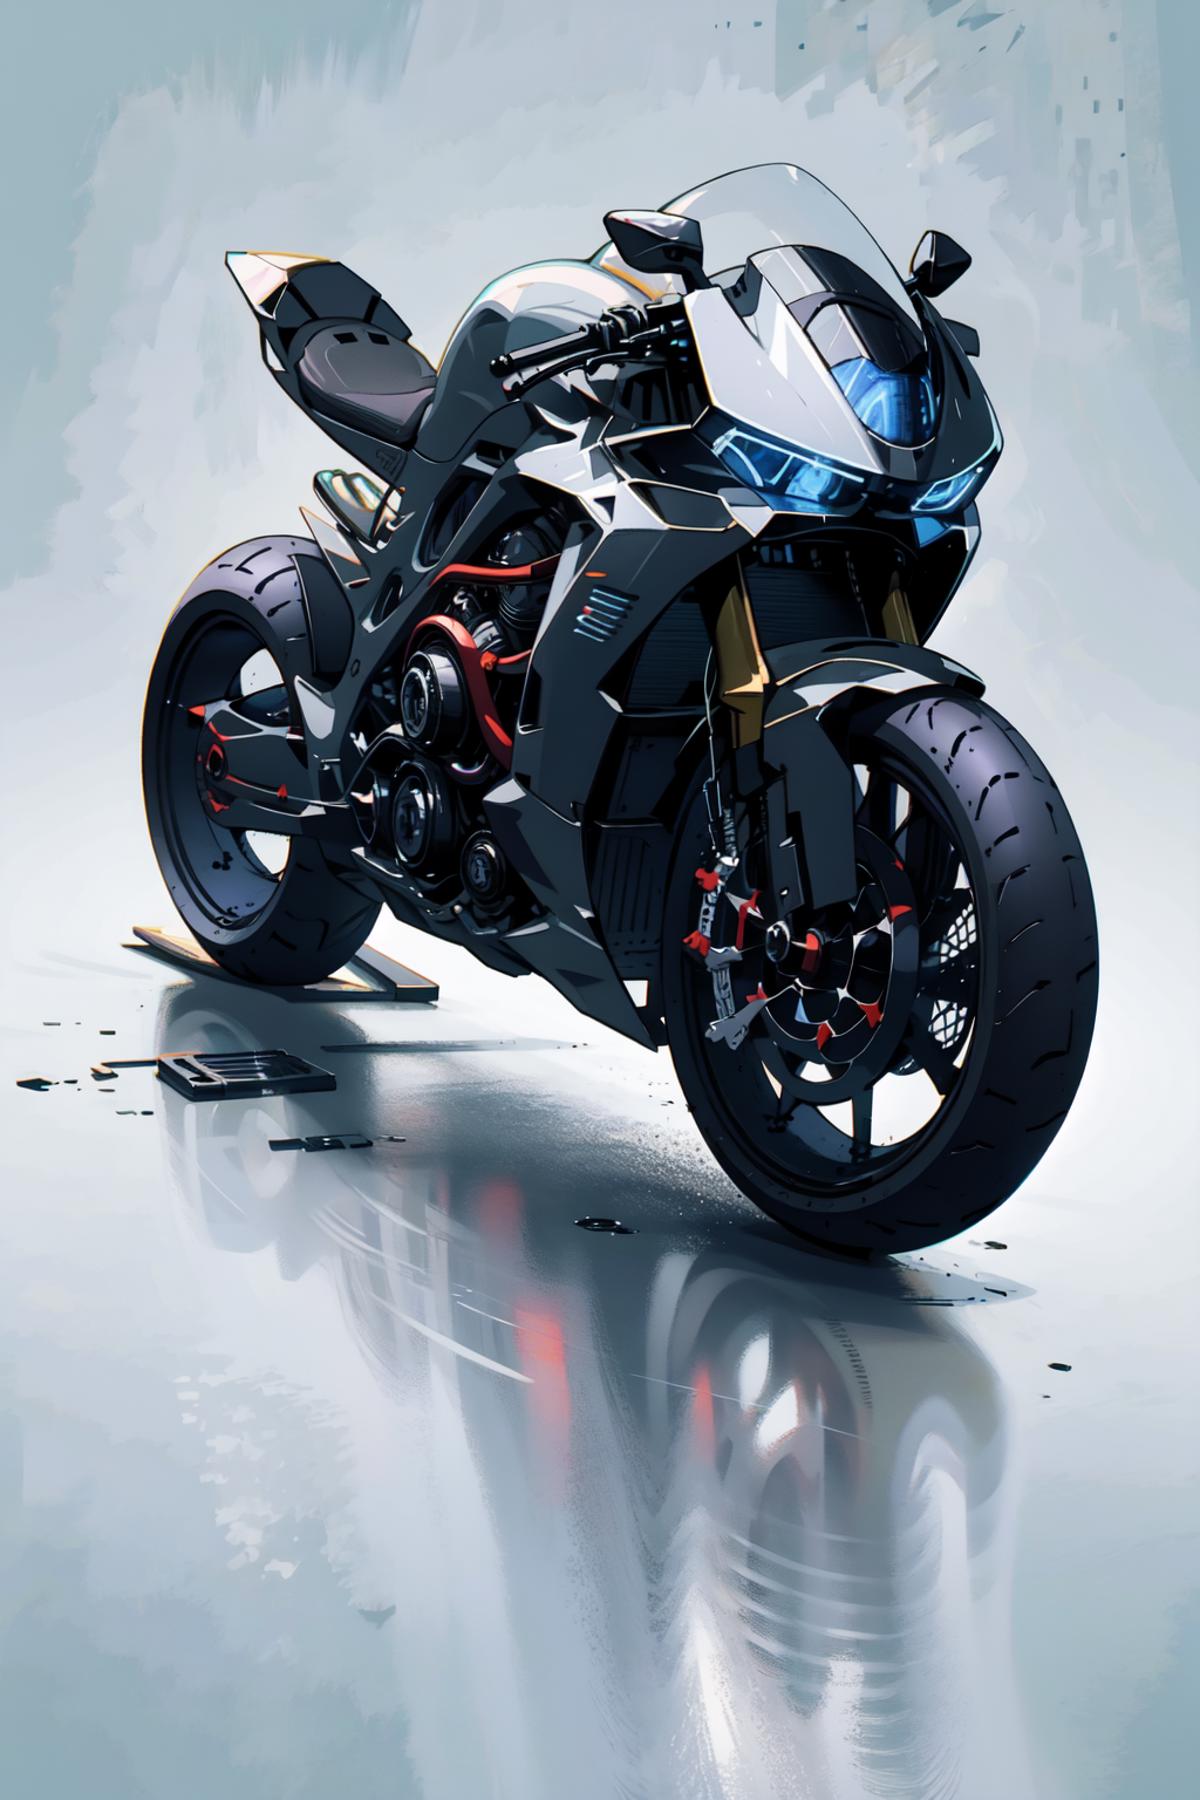 Futuristic Motorcycle Generator Concept image by Junbegun